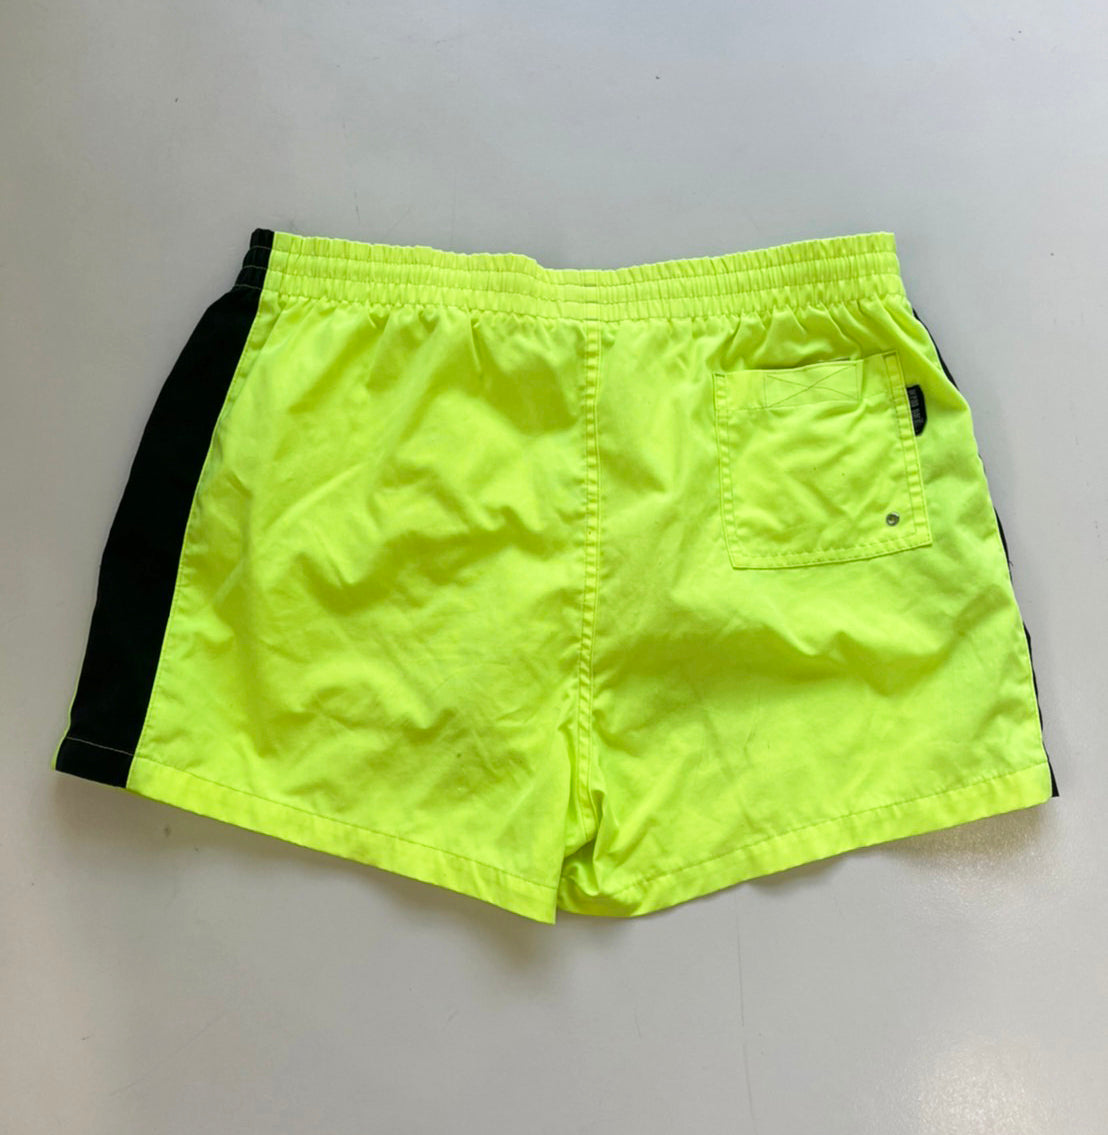 【Ocean Pacific】 90's vintage ocean pacific  Nylon beach short pants  Made in USA (men's LL)